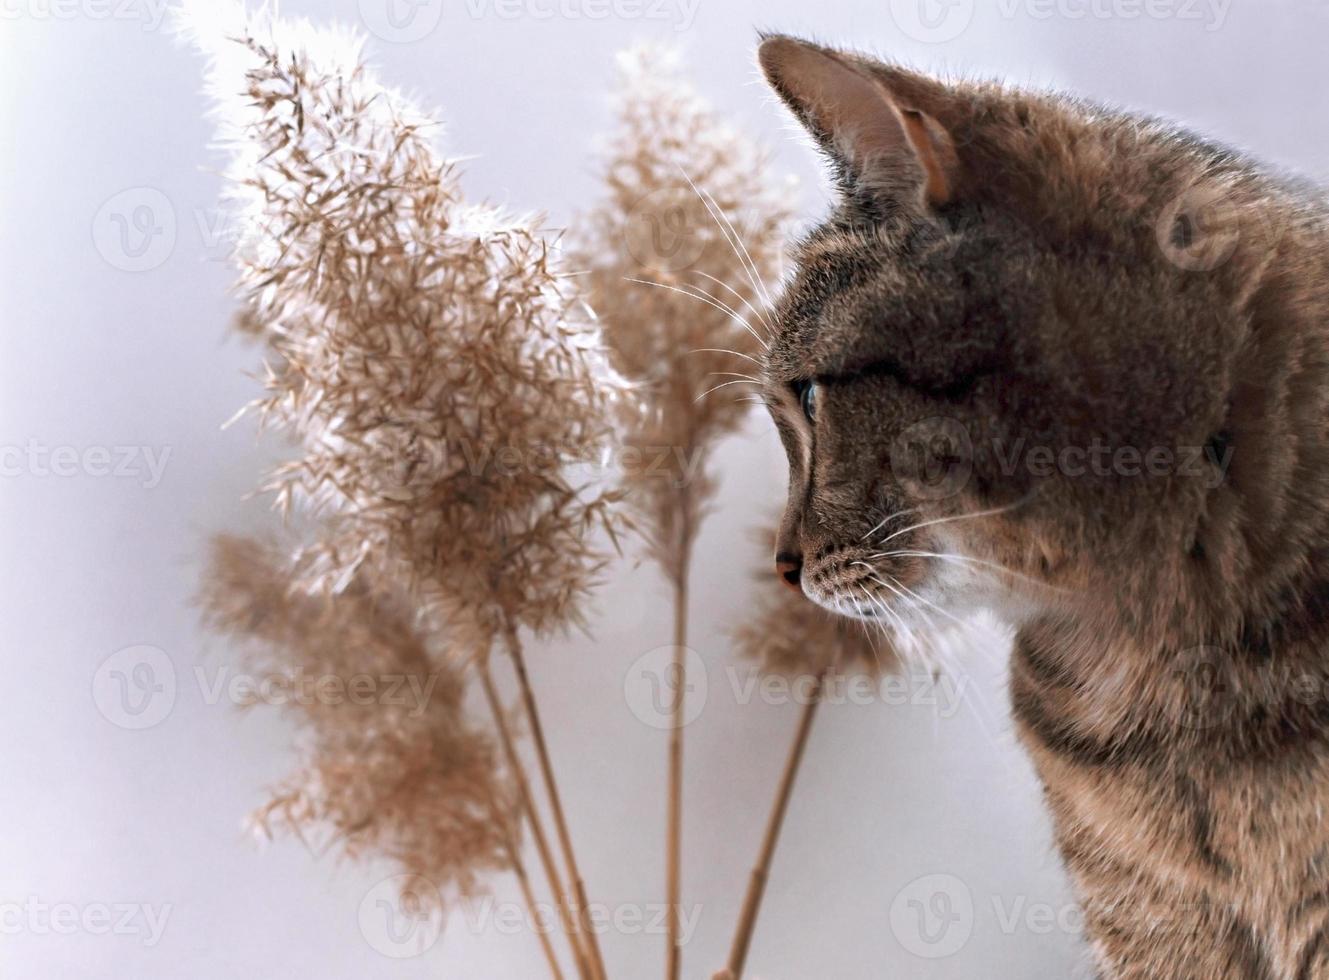 gato gris atigrado de caballa cerca de ramitas de caña secas y esponjosas, enfoque selectivo, paleta neutra foto